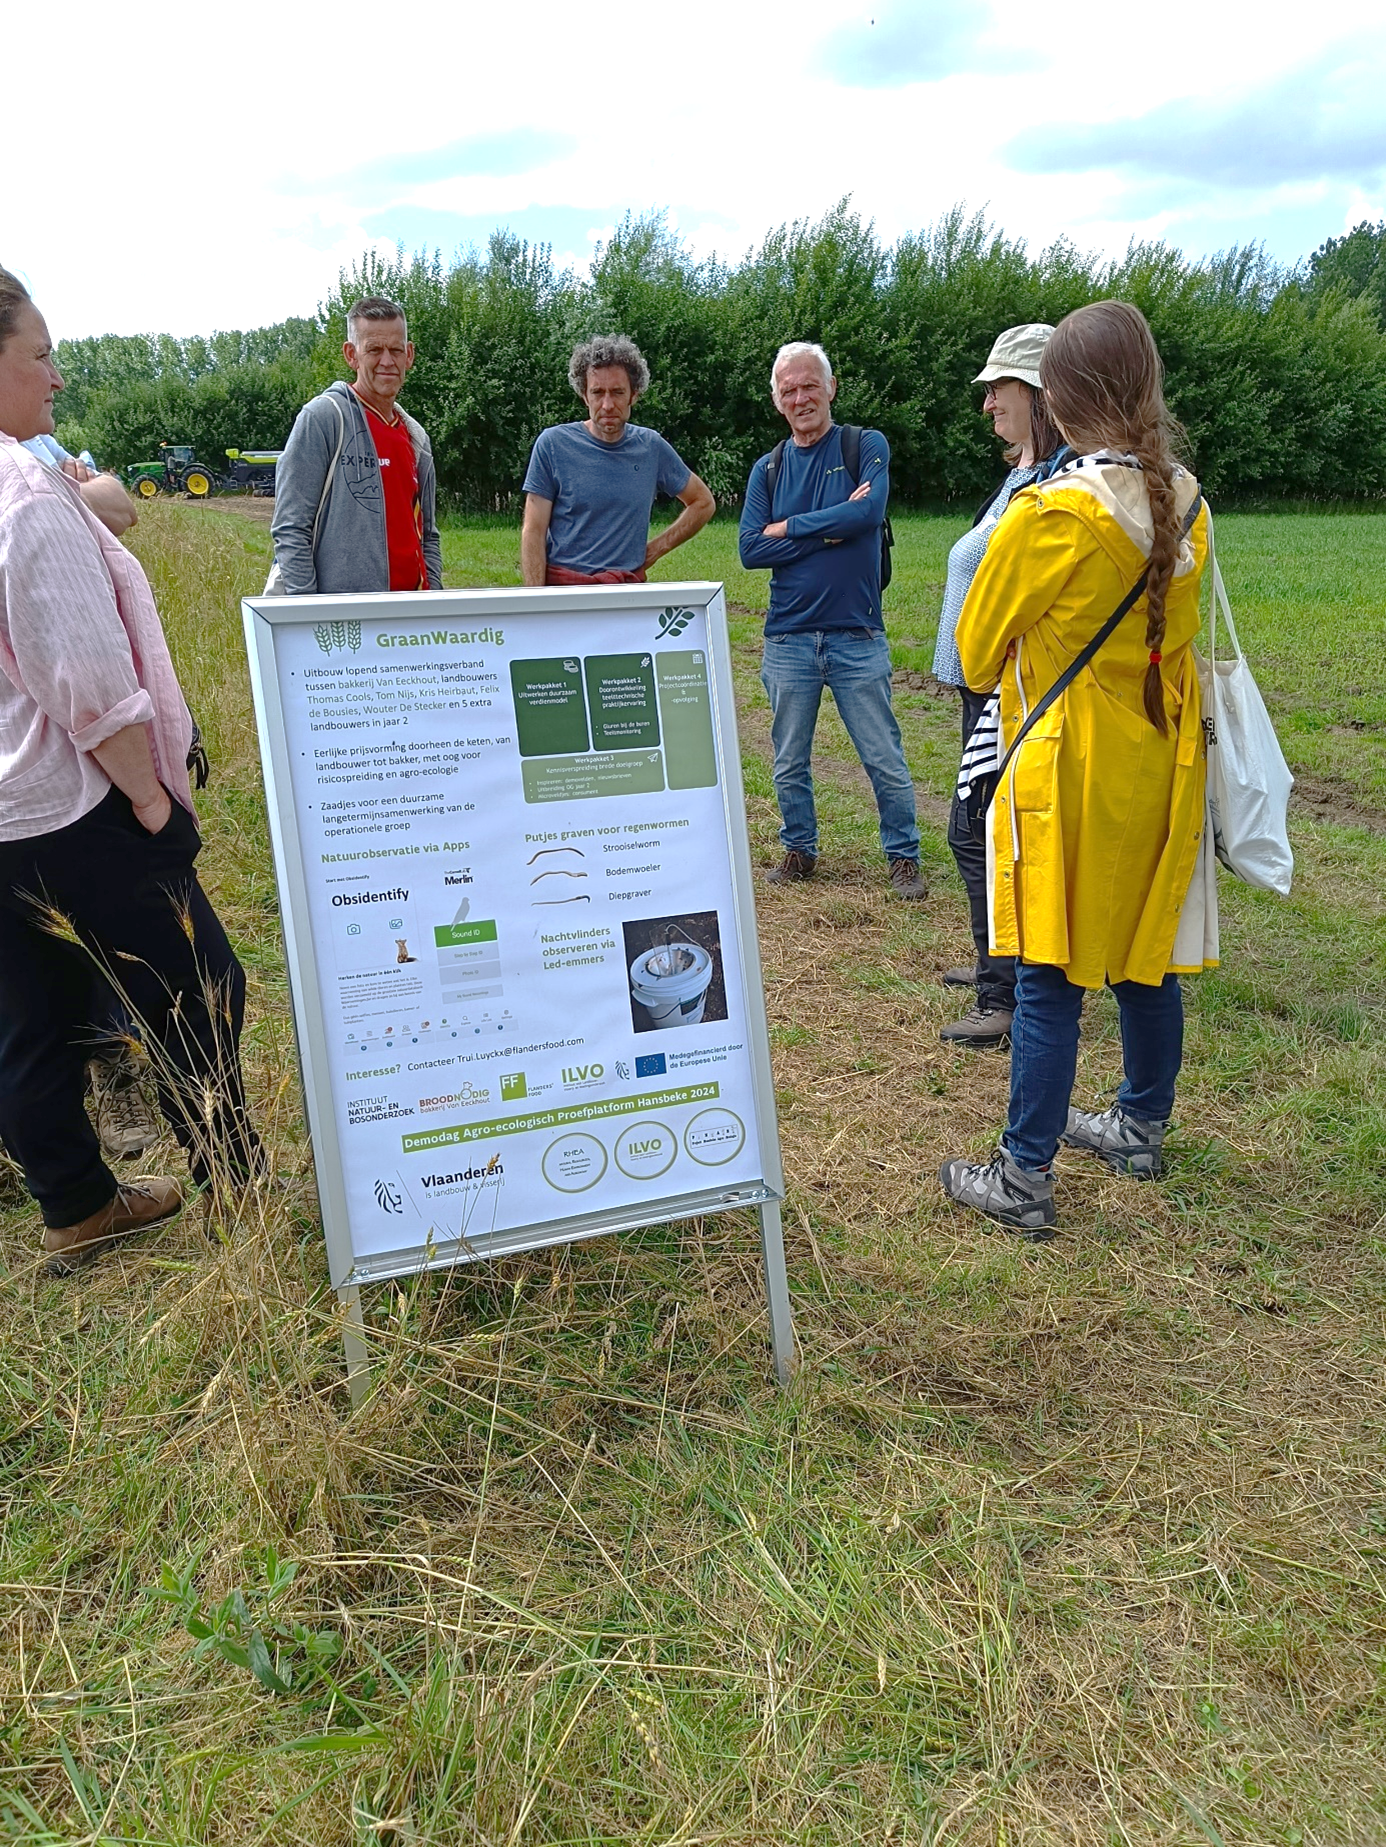 Demodag agro-ecologisch proefplatform Hansbeke – GraanWaardig poster INBO